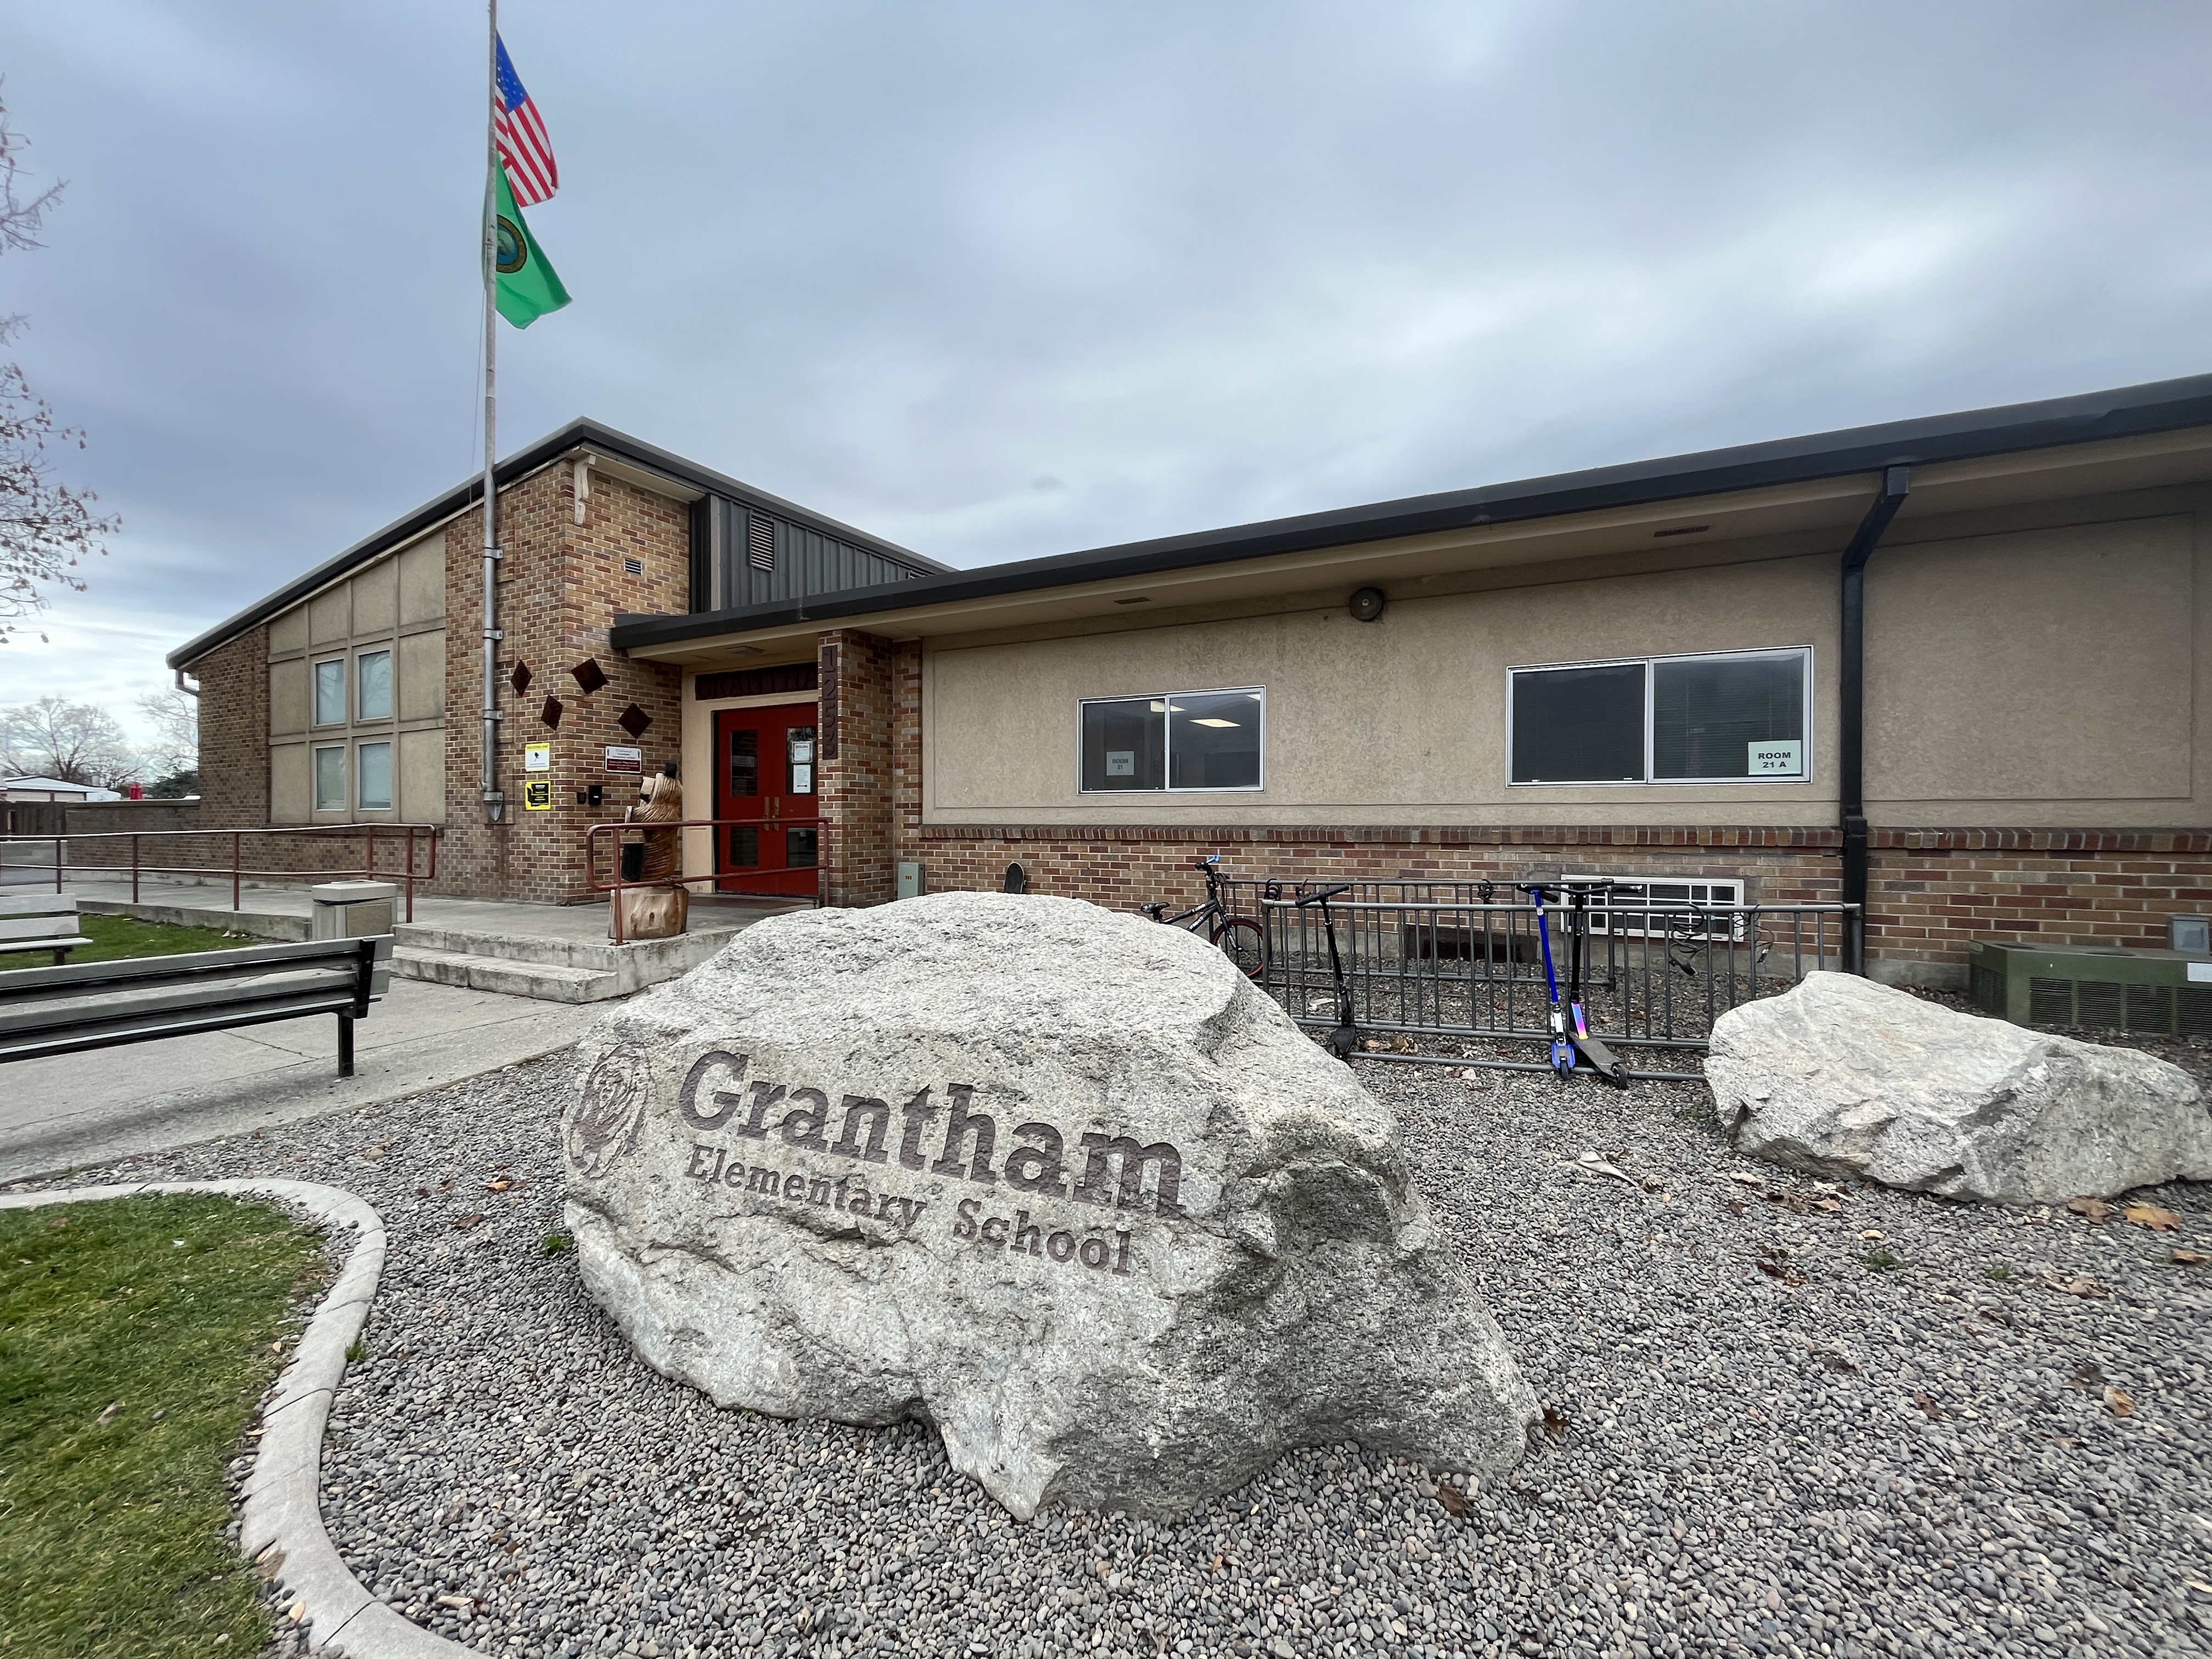 Grantham Elementary School